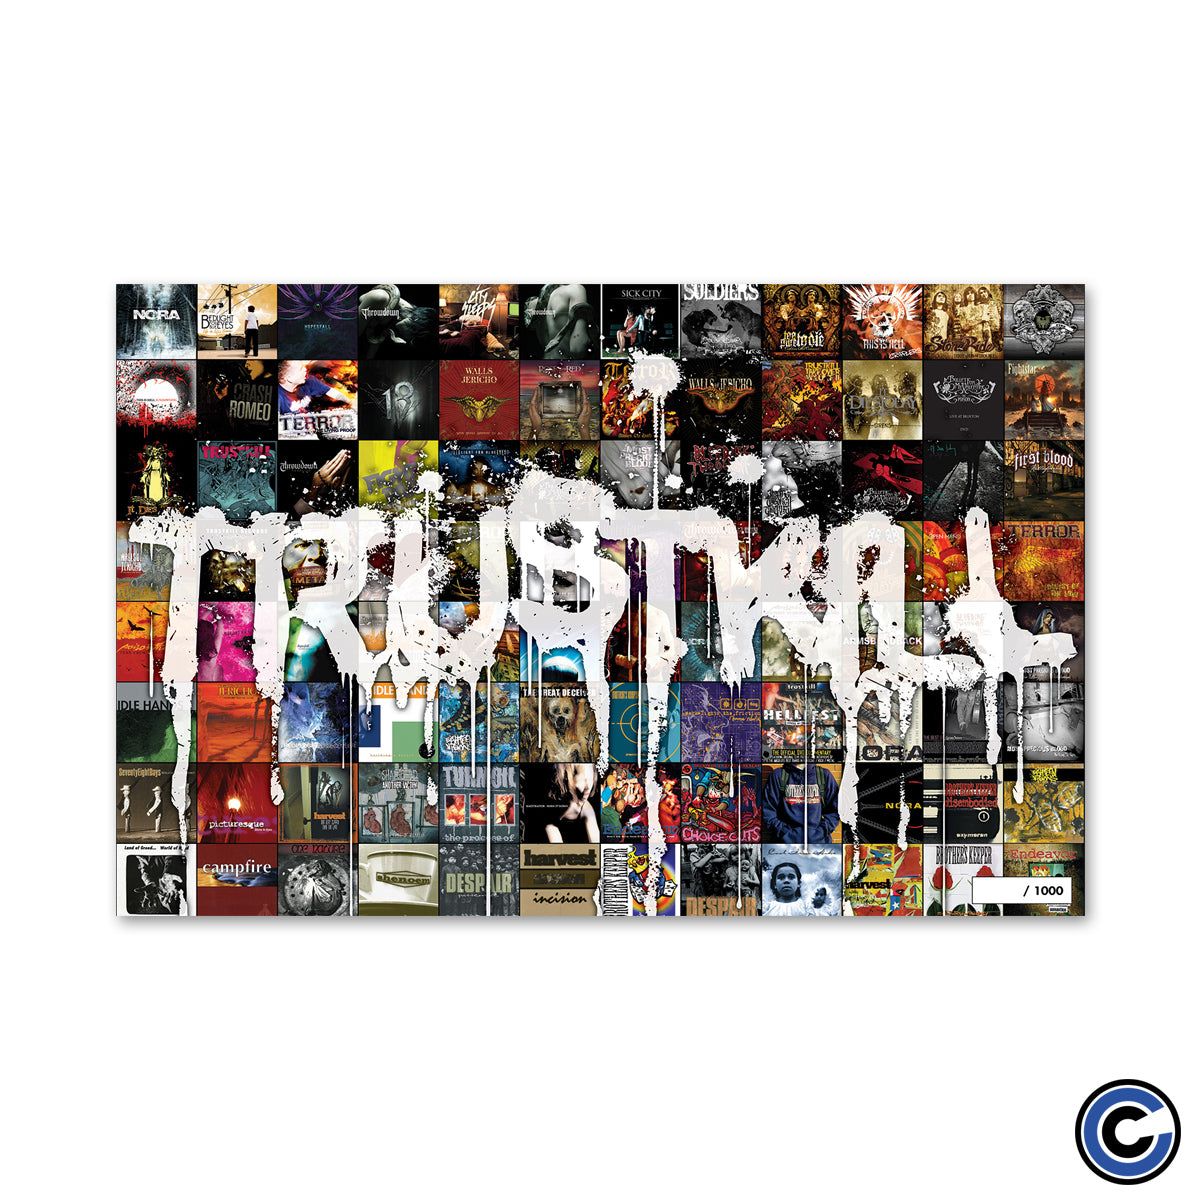 Trustkill Records "Albums" Poster